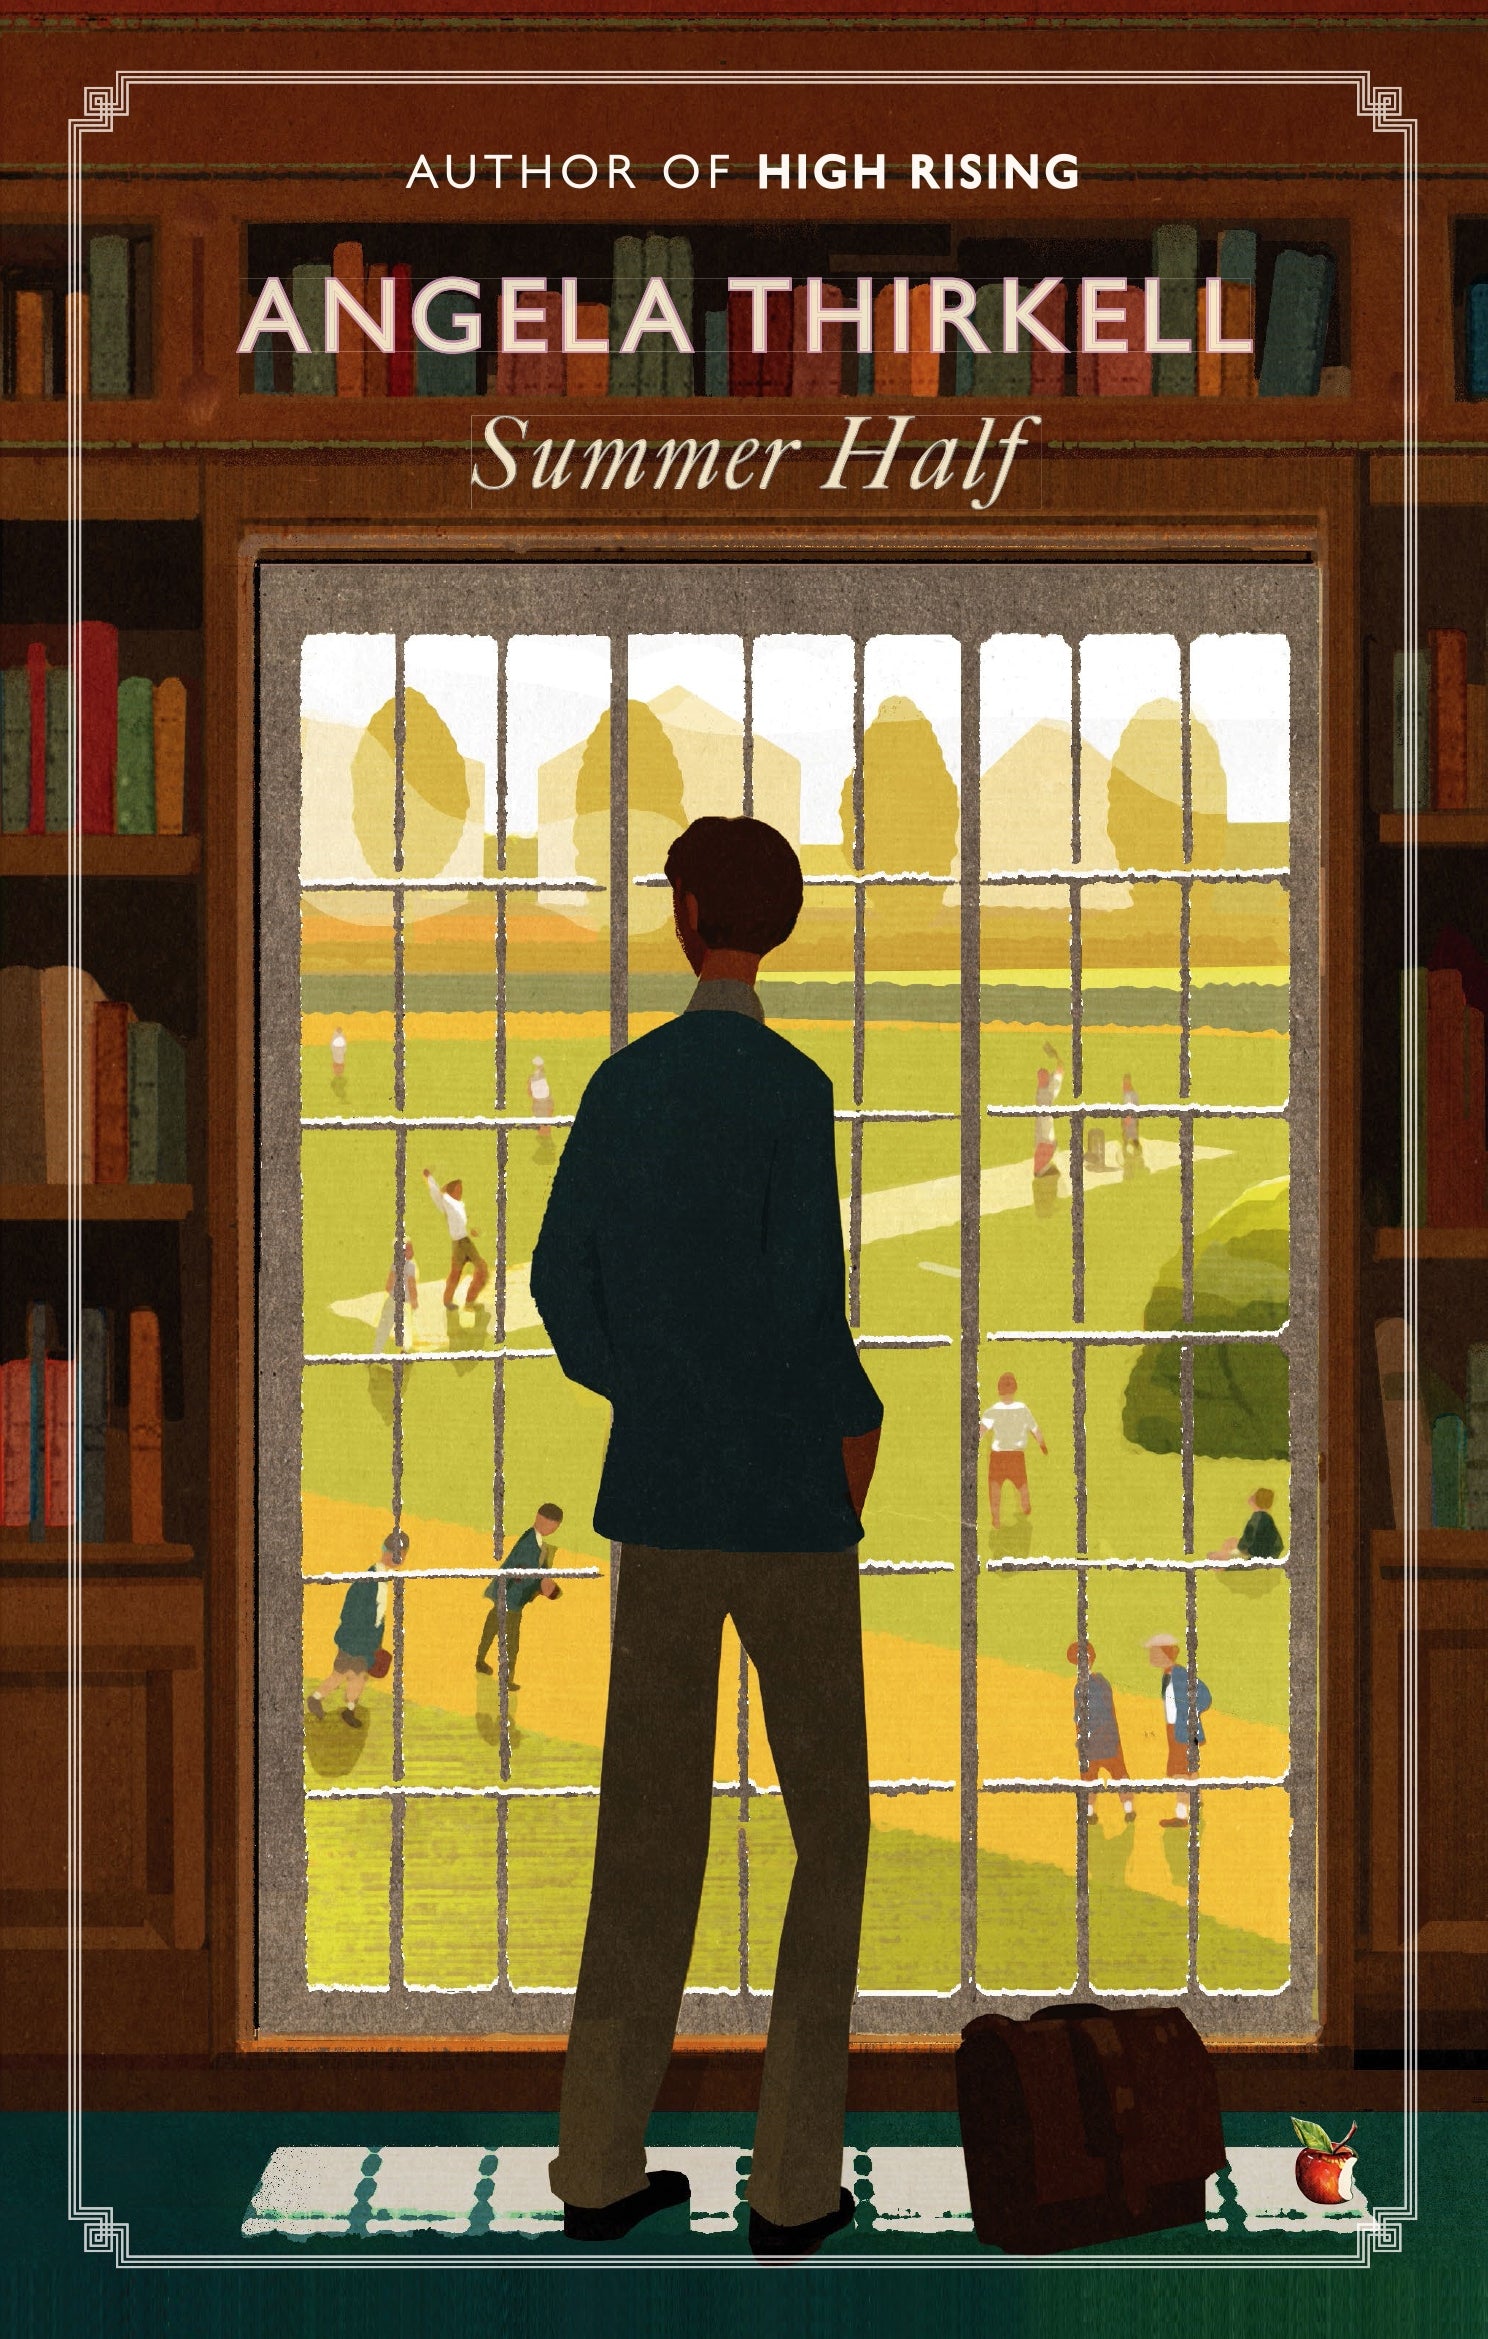 Summer Half by Angela Thirkell